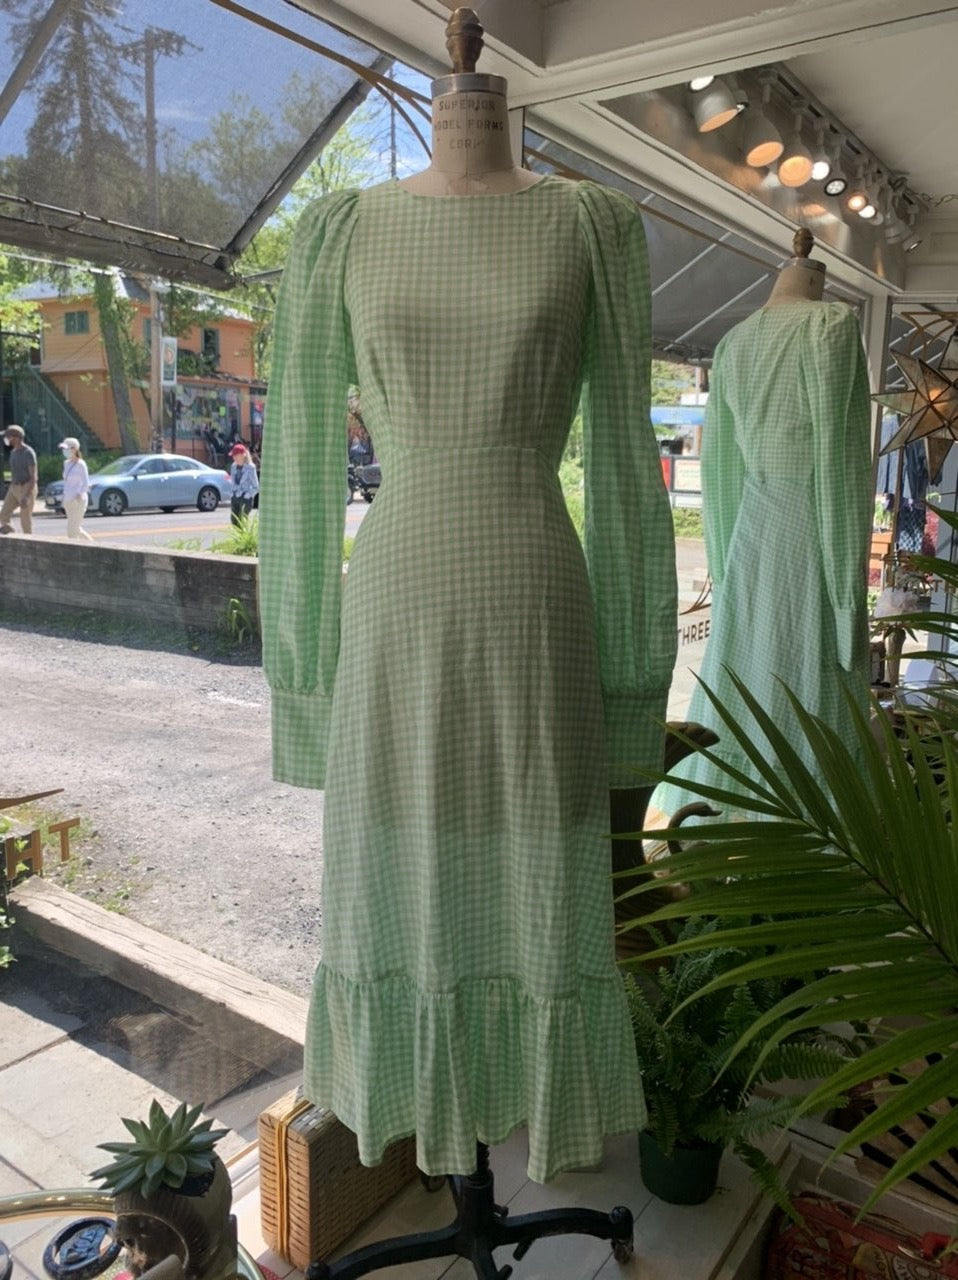 Green Gingham Dress